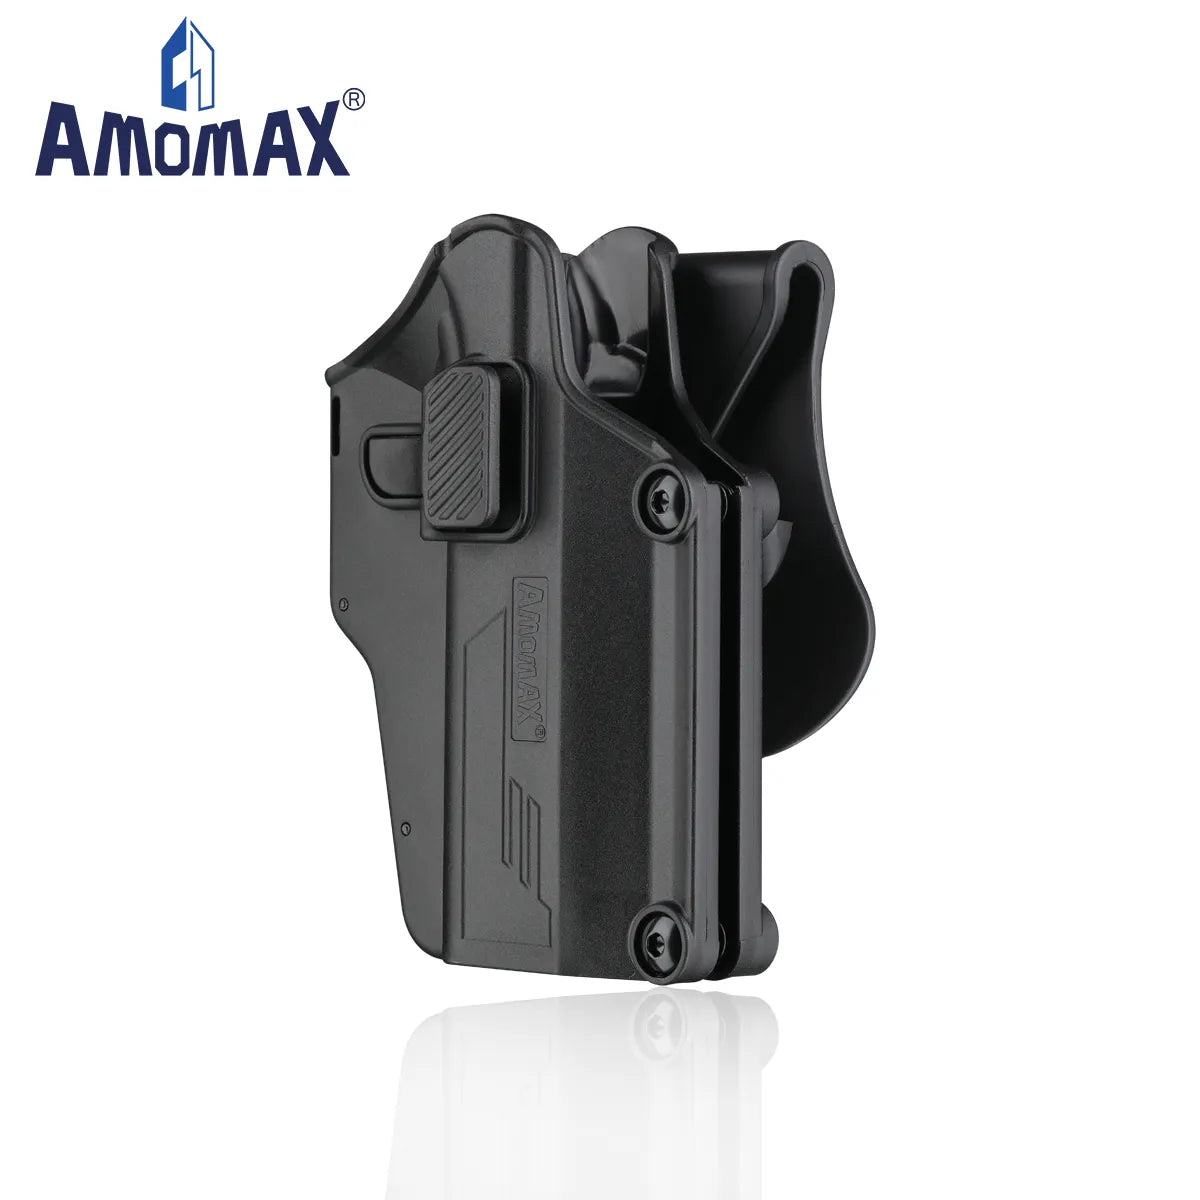 Amomax Universal Holster Fits Glock 17 19 26